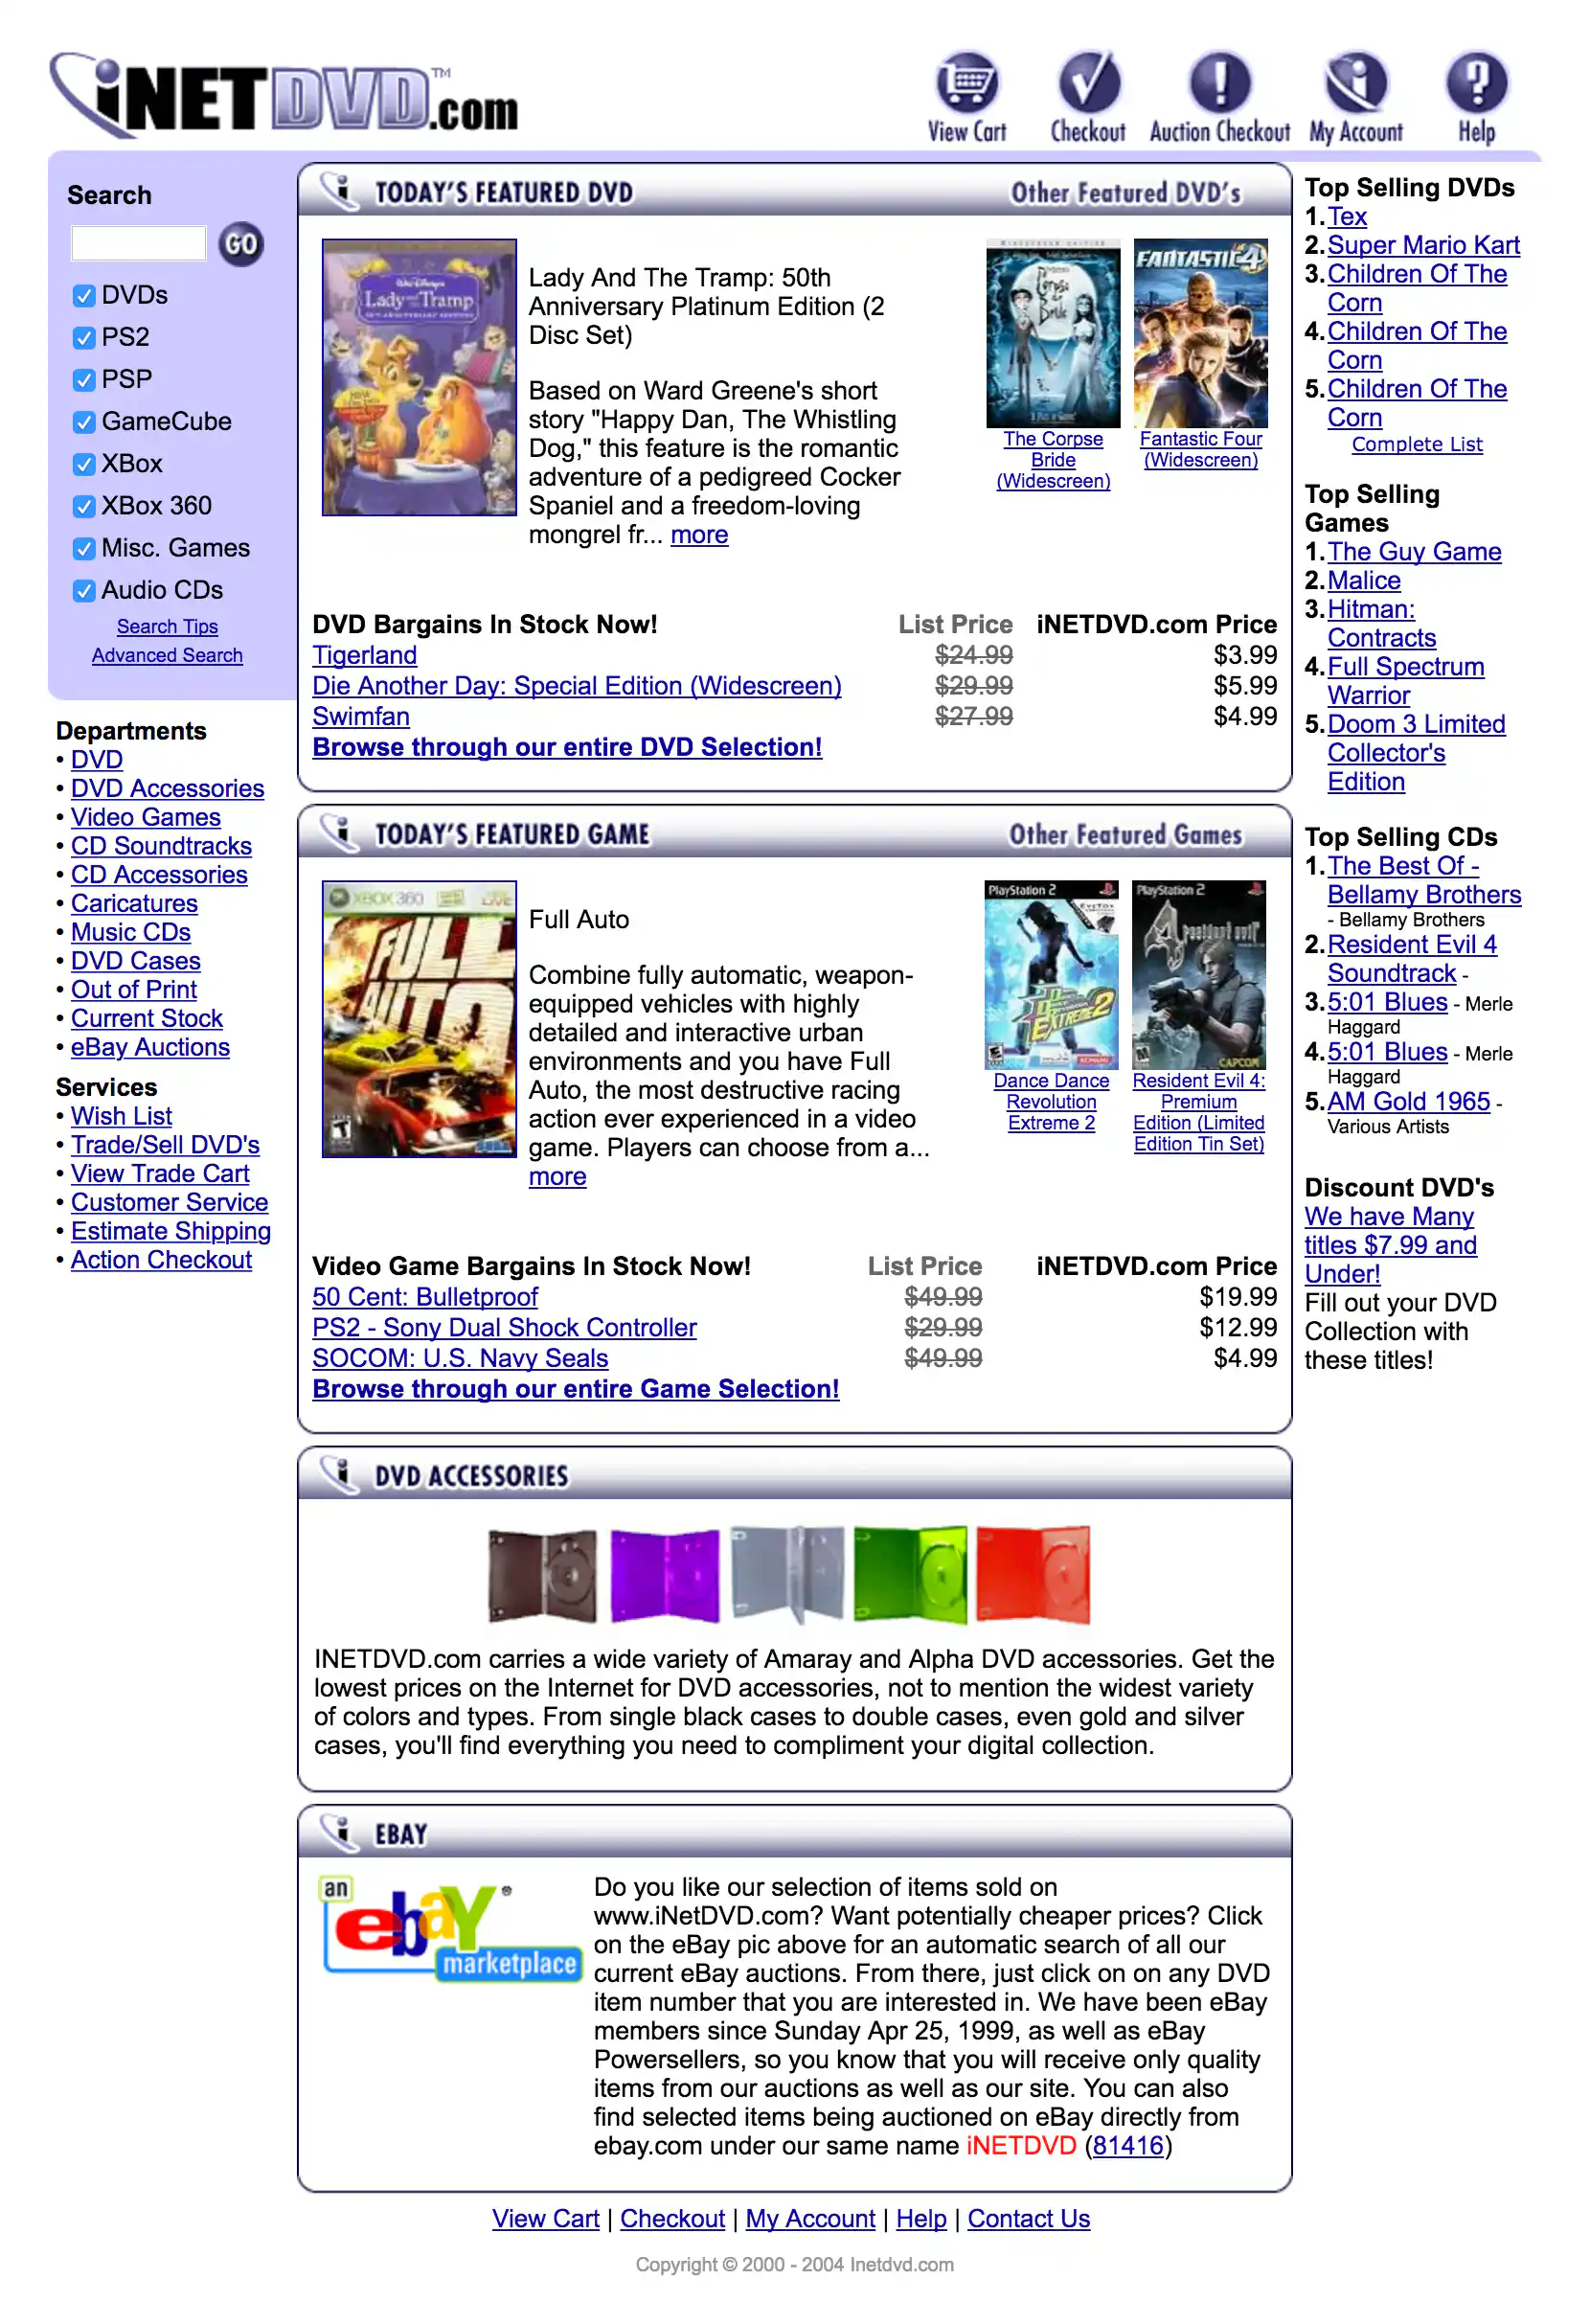 iNetDVD.com Website Homepage Design 2003